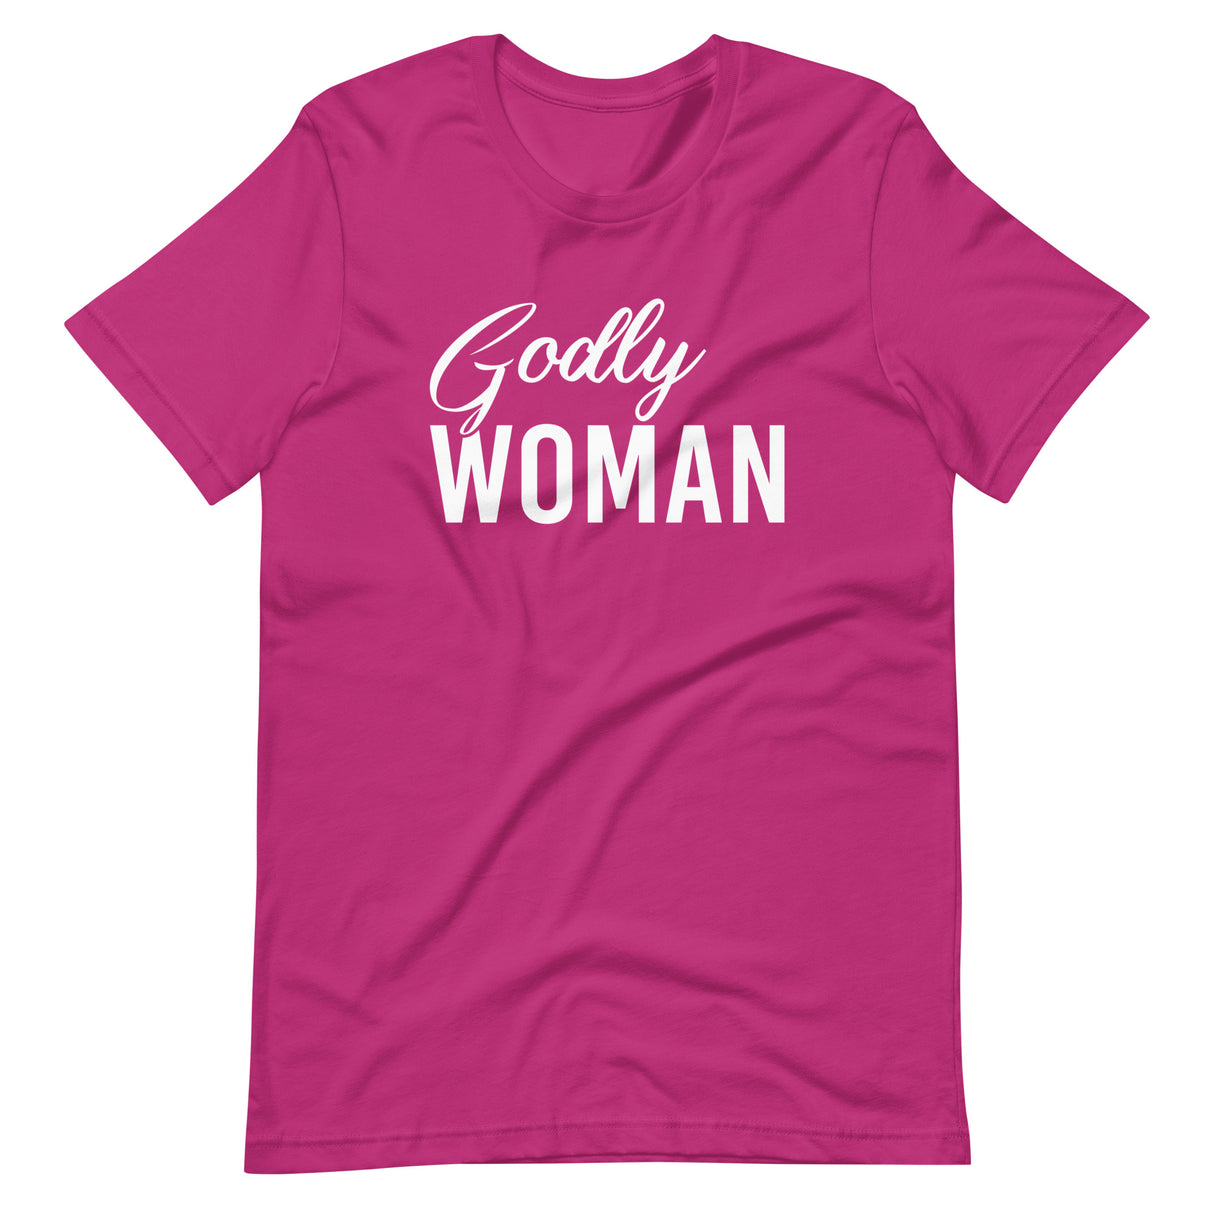 Godly Woman Shirt